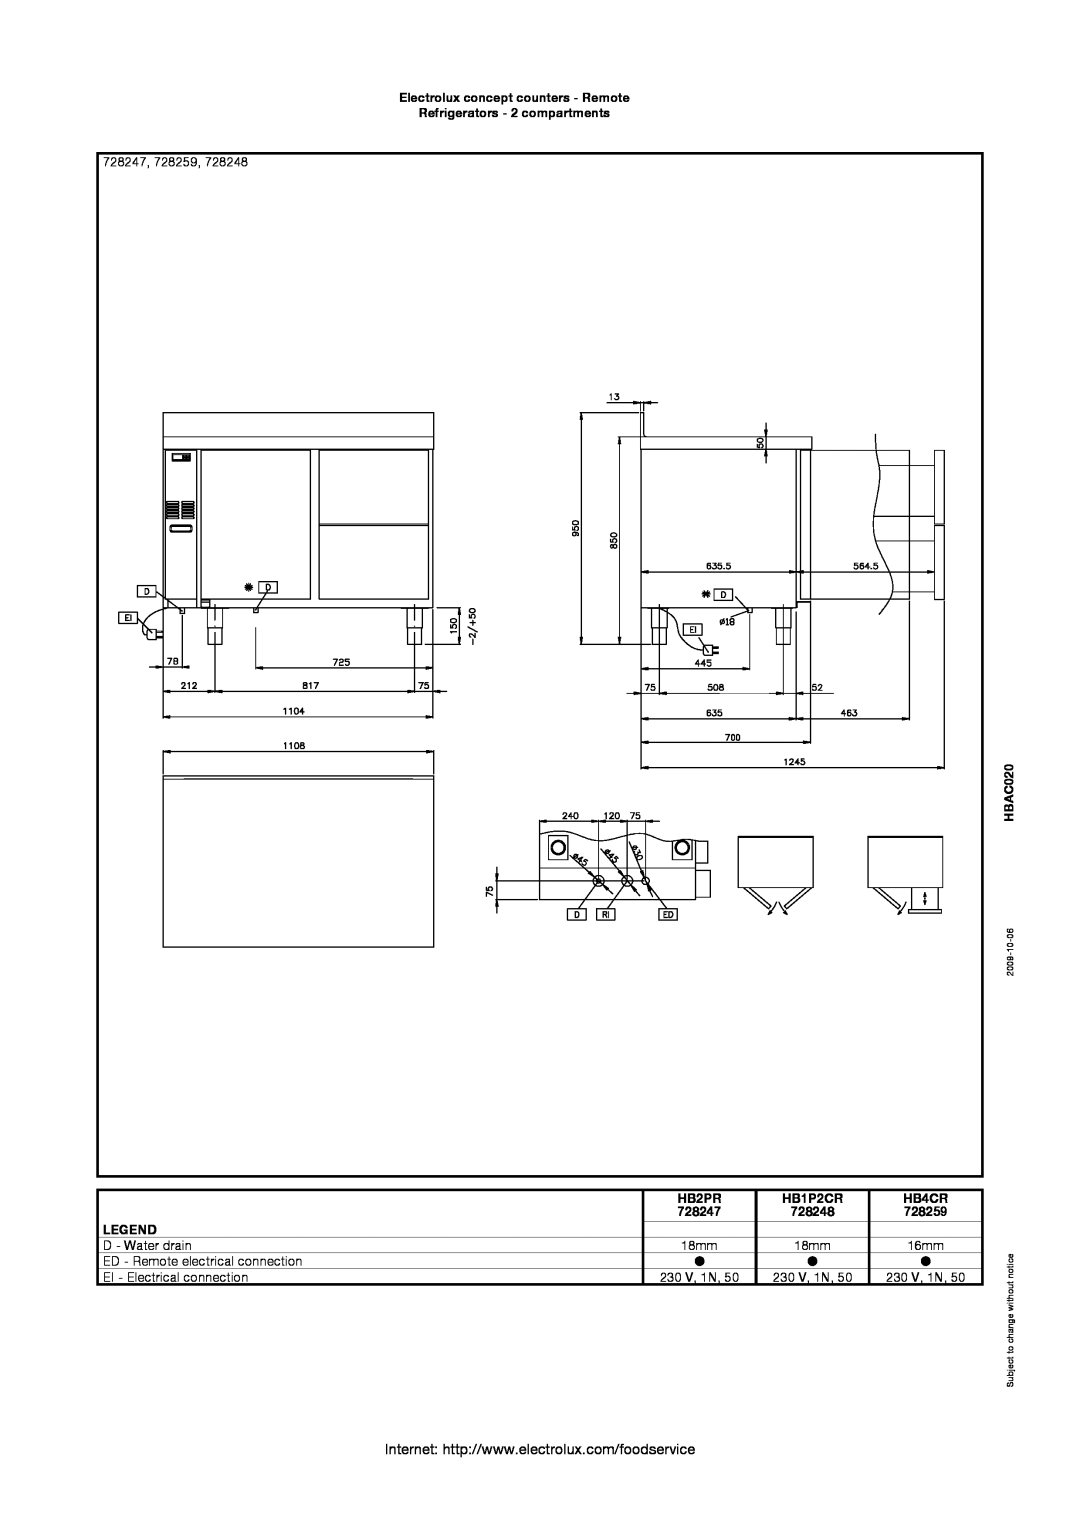 Electrolux 728259 HB2PR, HB1P2CR, HB4CR, Electrolux concept counters - Remote Refrigerators - 2 compartments, HBAC020 